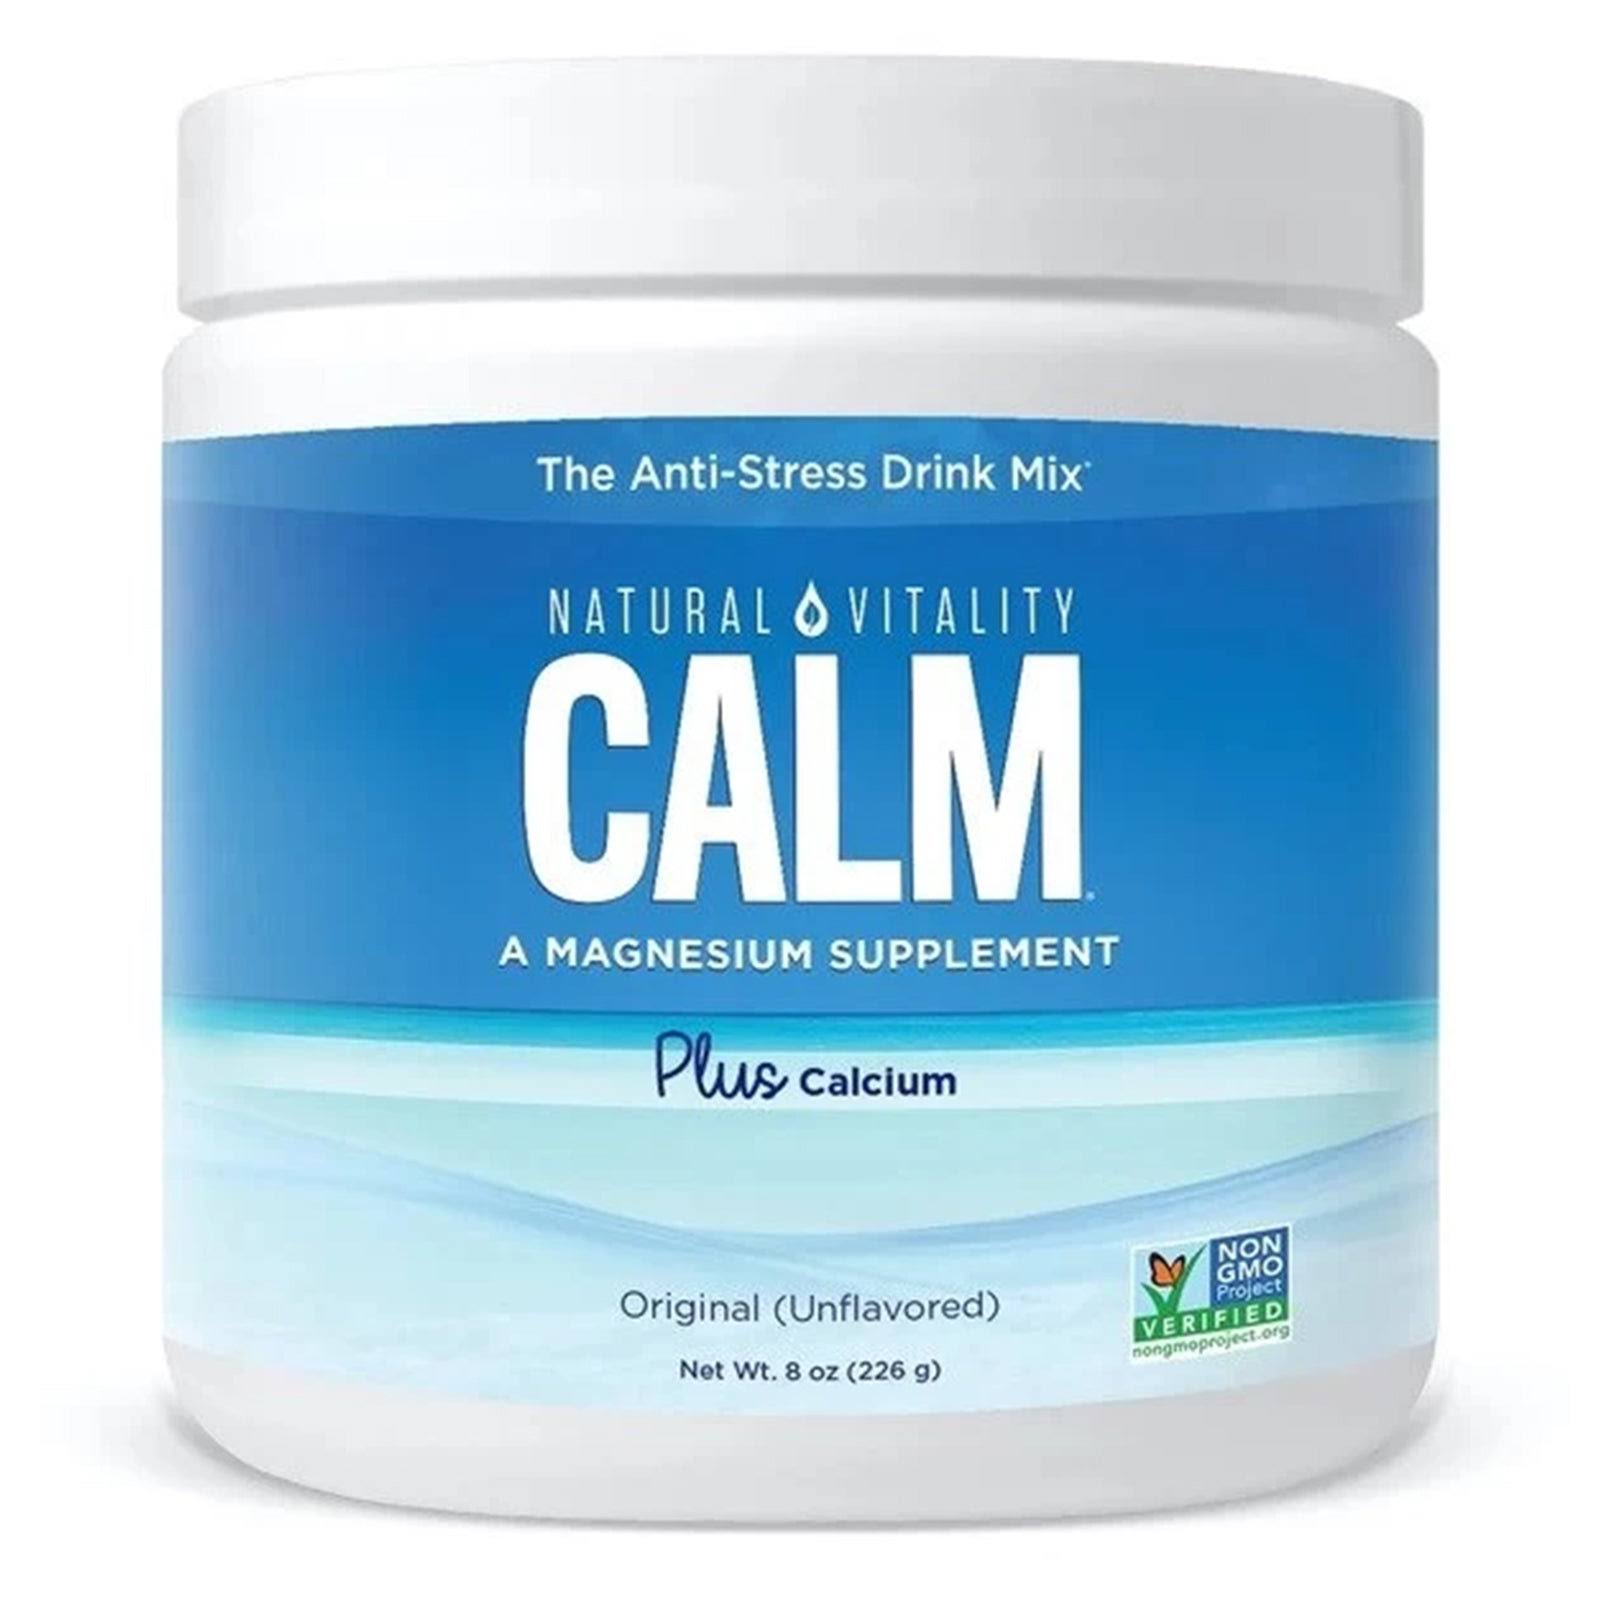 Natural Vitality Natural Calm Plus Calcium Unflavored, 226g